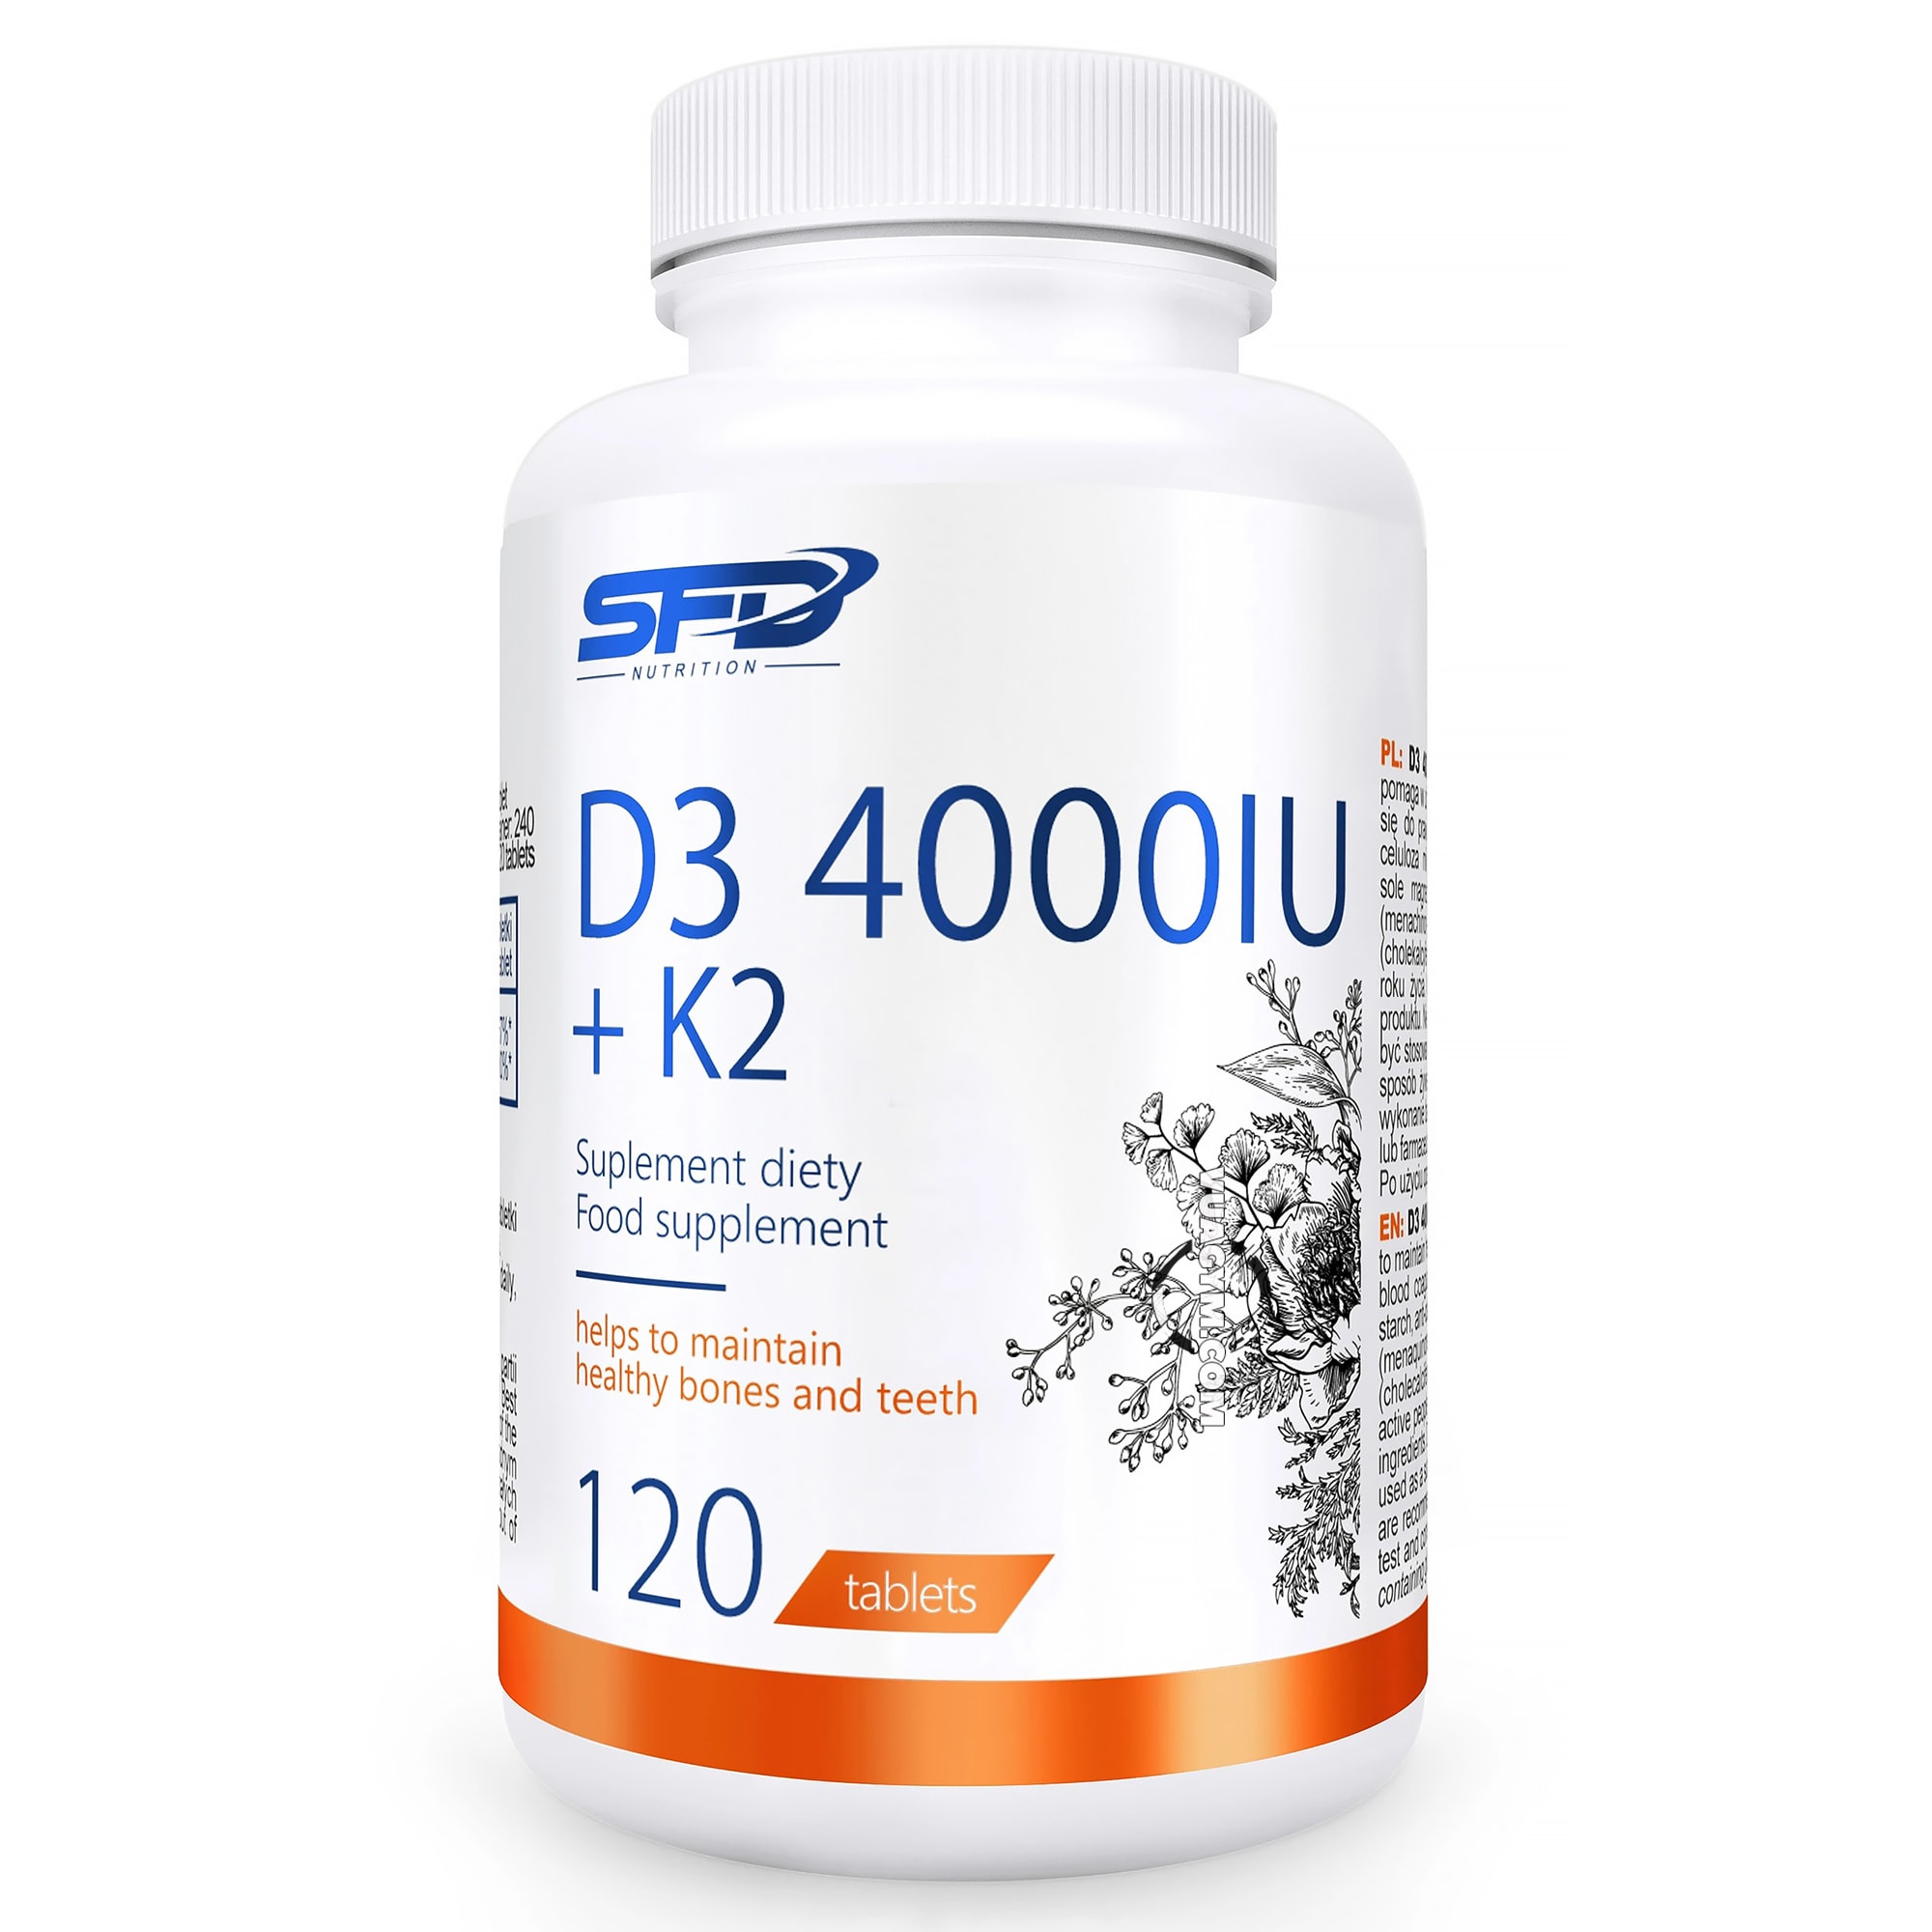 Ai nên sử dụng vitamin D3 4000IU?
